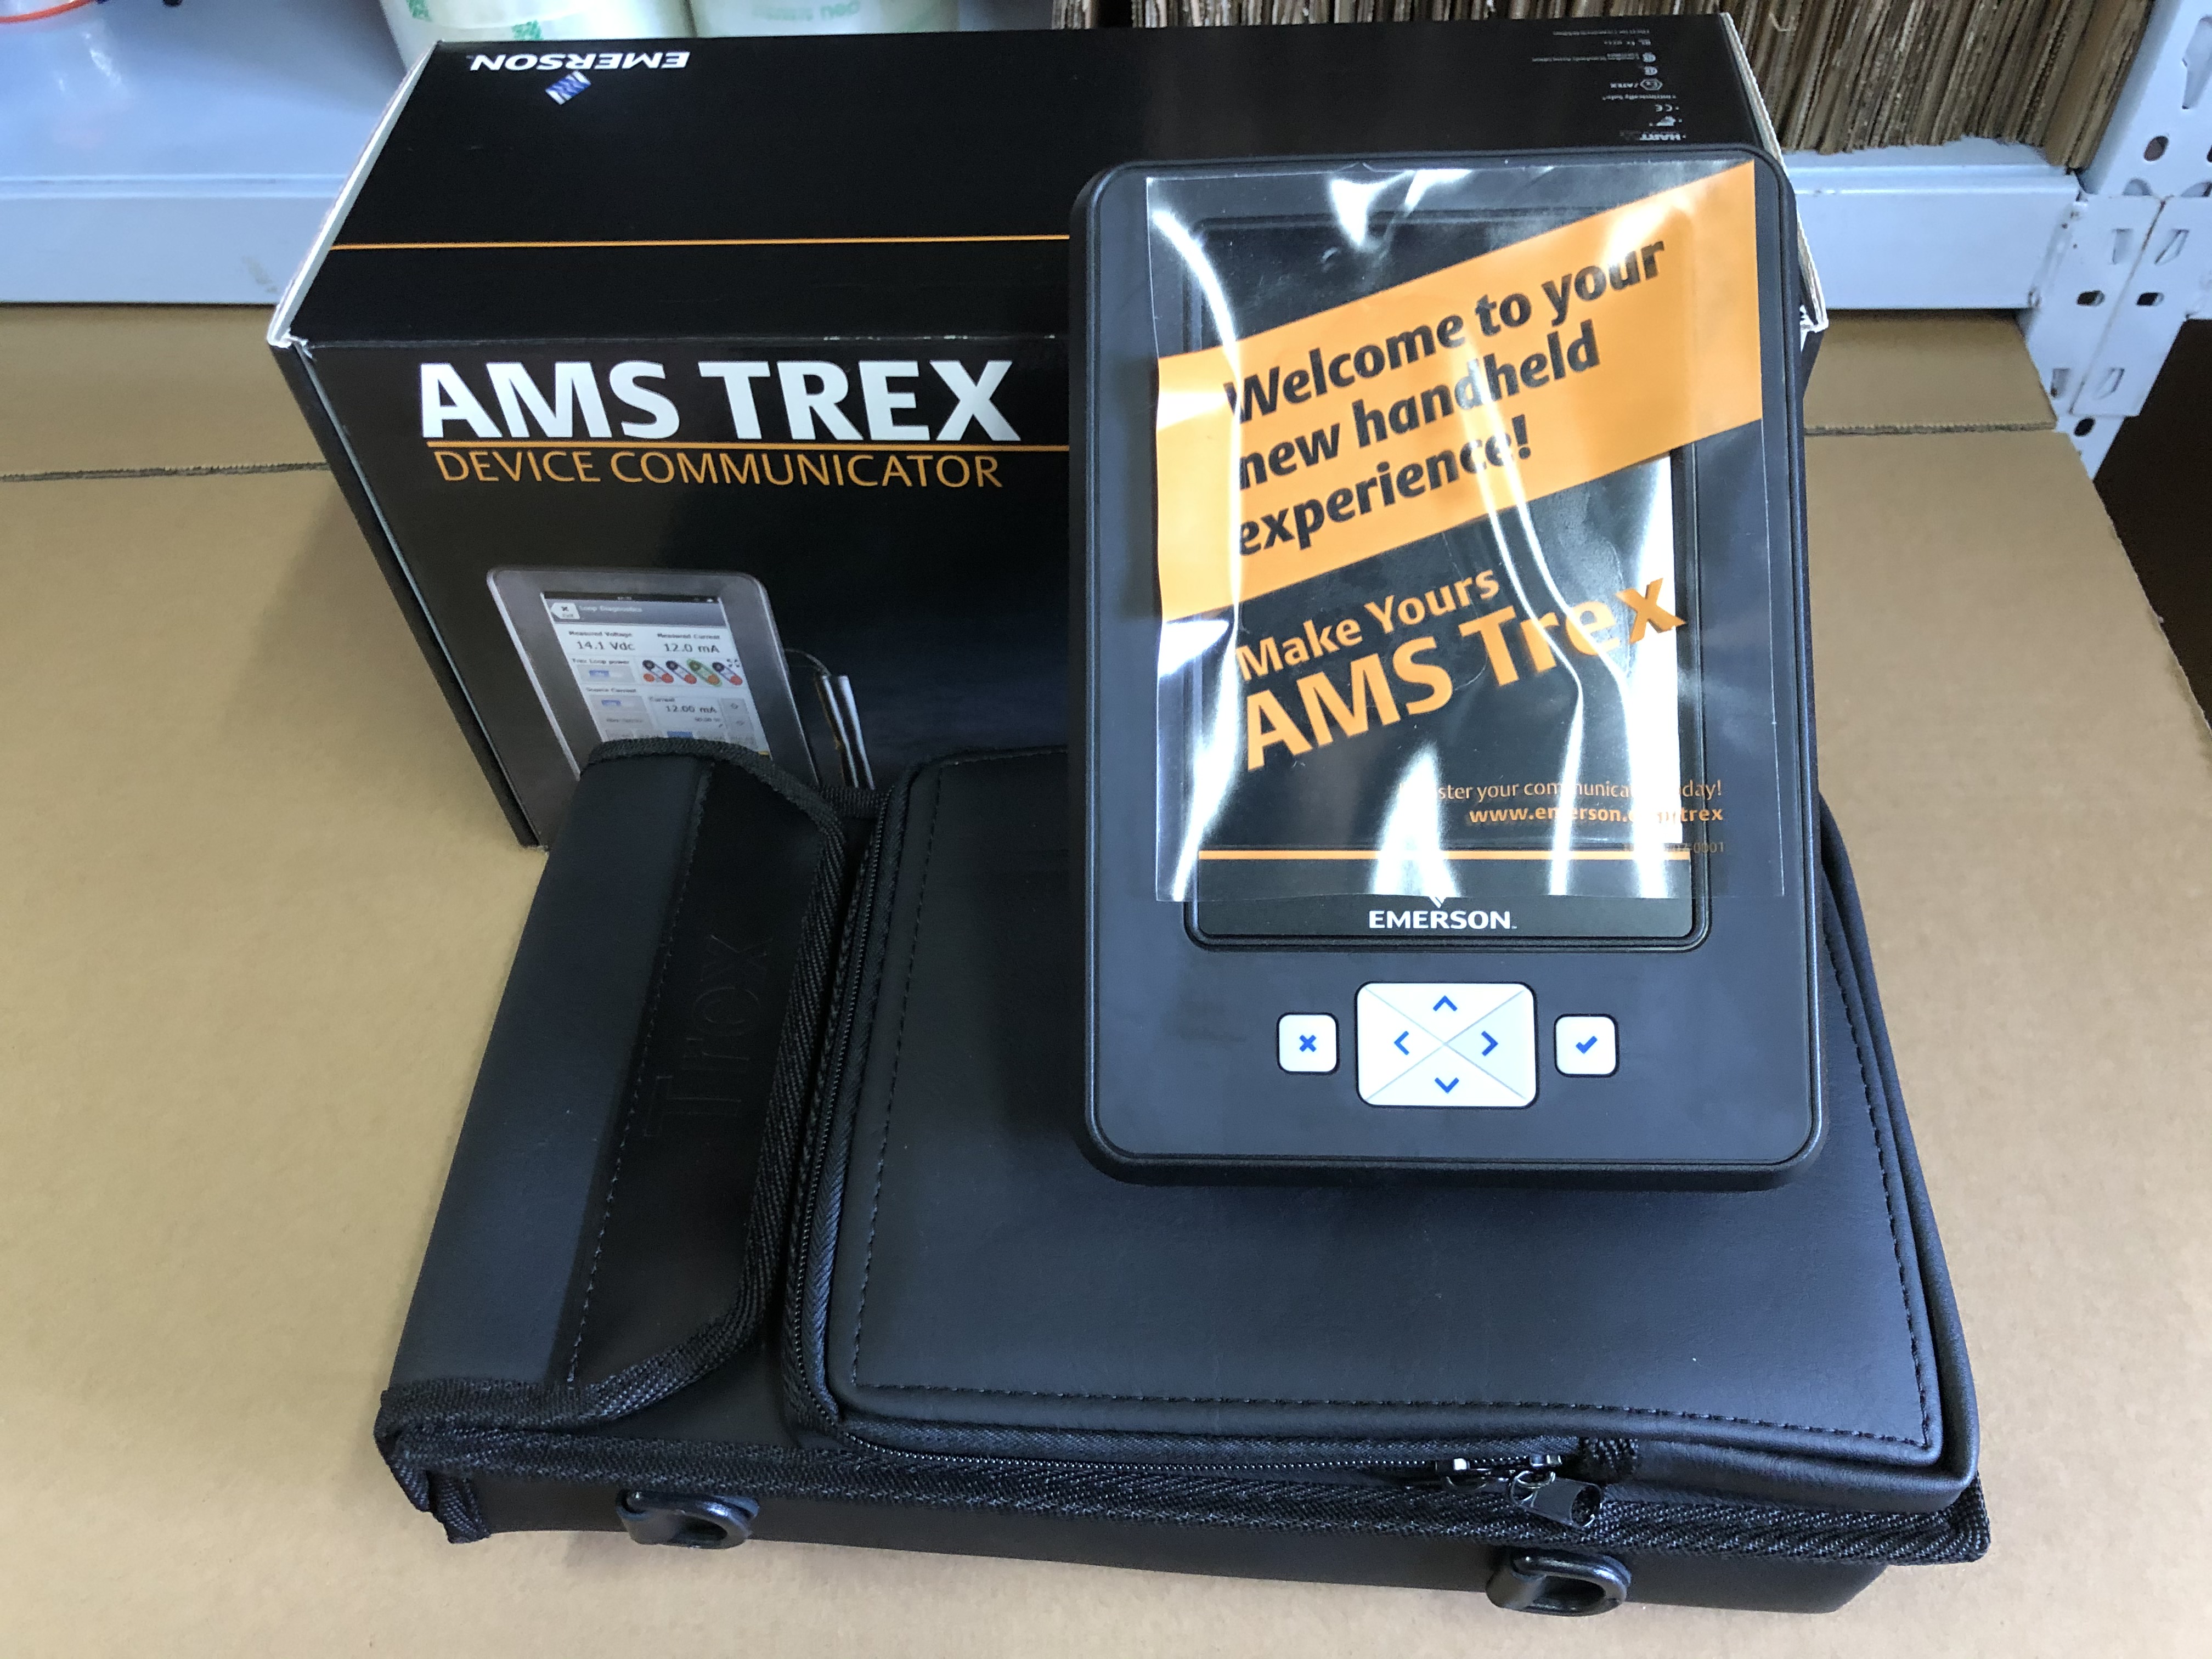 Emerson AMS TREX device communicator